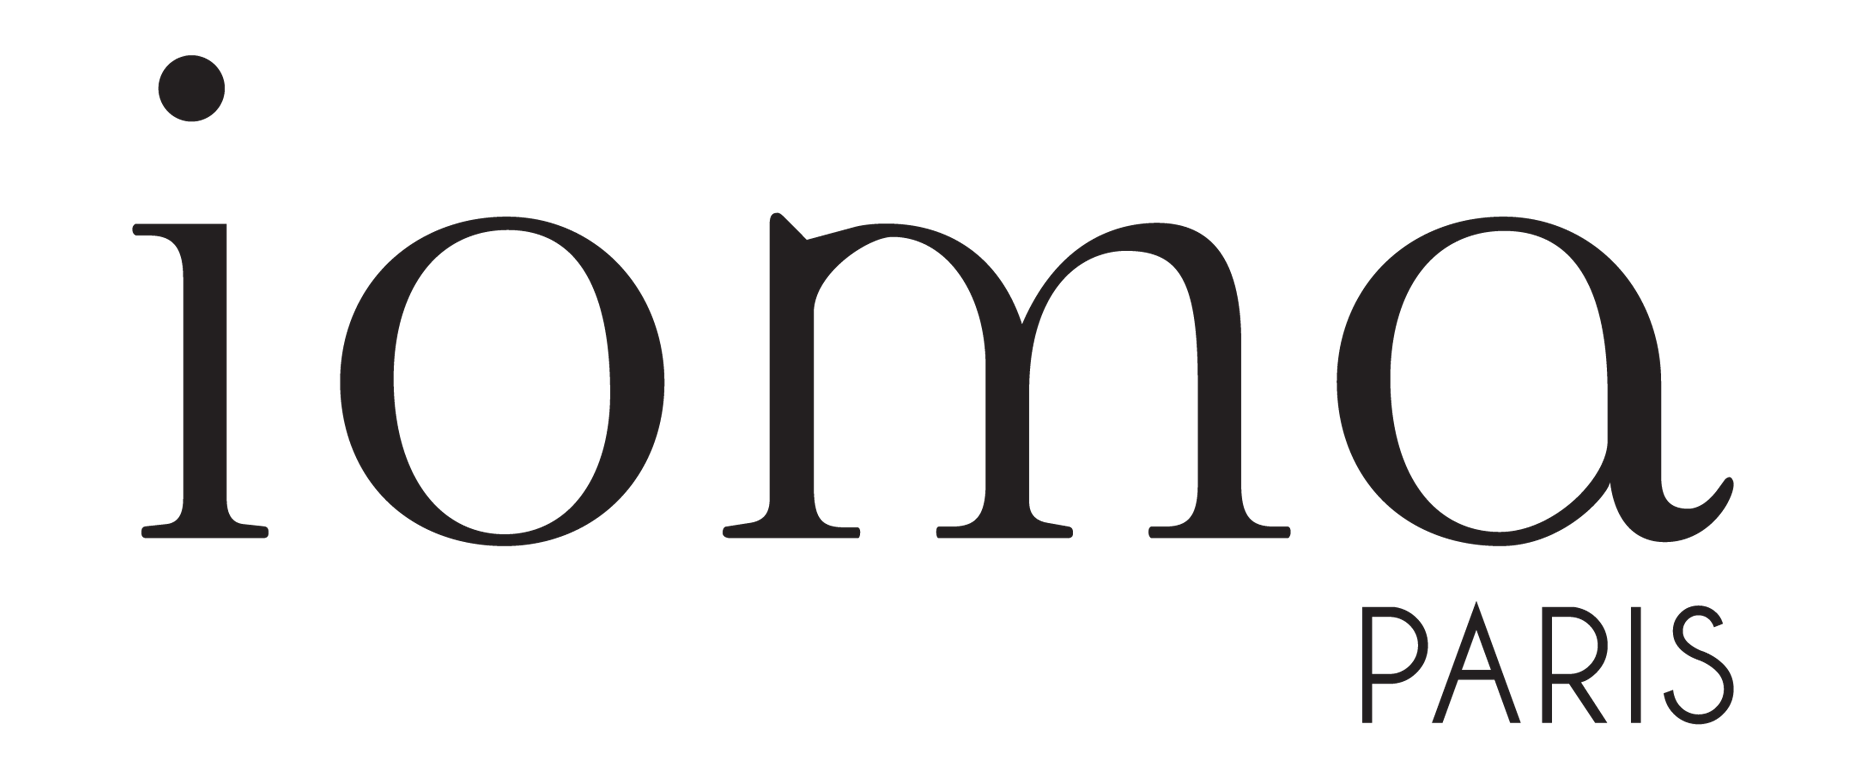 logo IOMA Shop Việt Nam